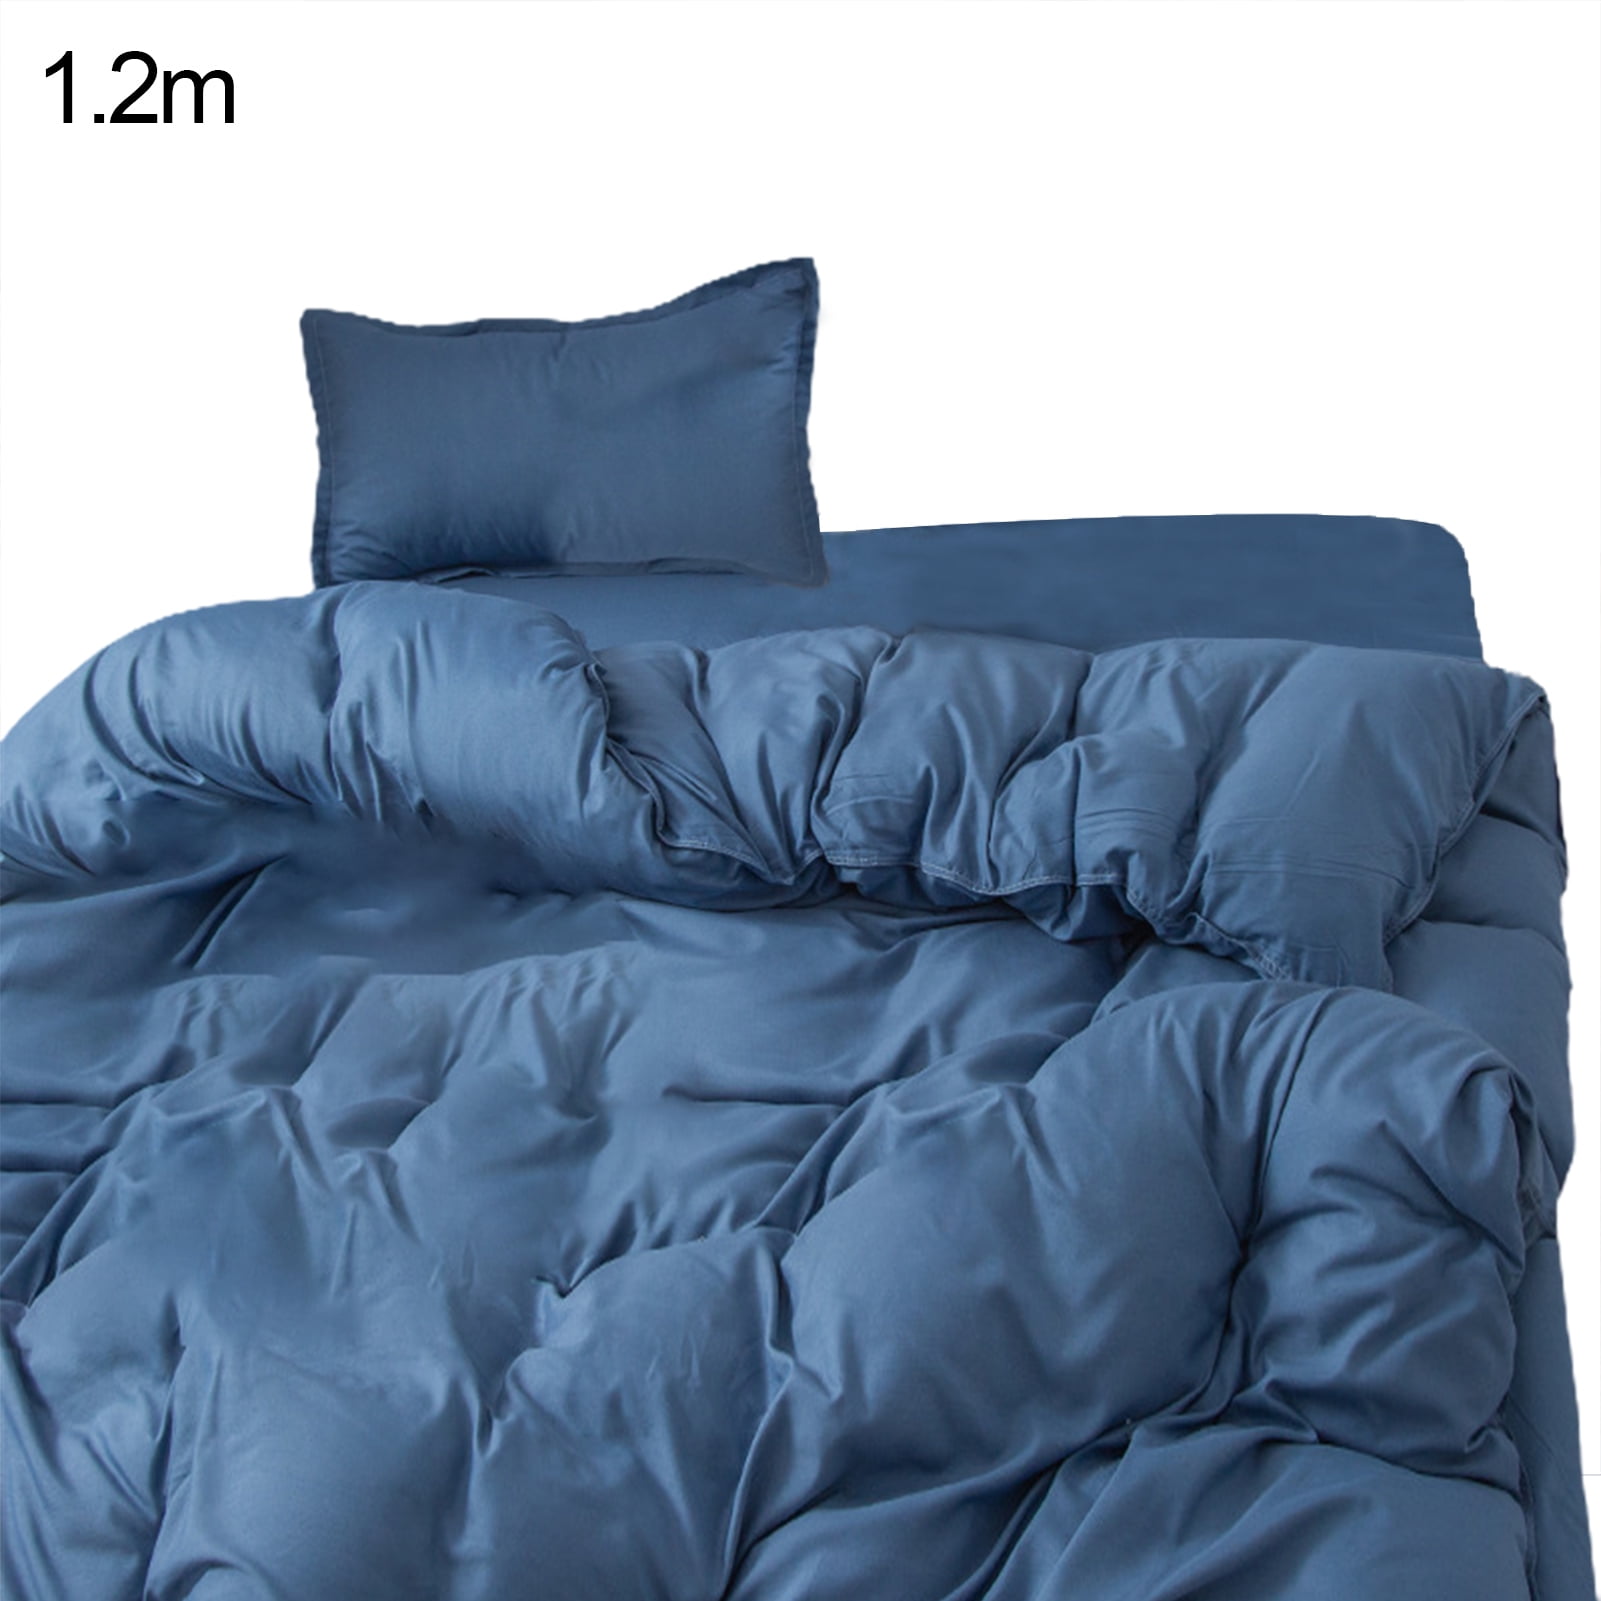 Details about   Cotton Satin Bedding Set Comforter Duvet Cover Bed Sheet Pillow Quilt Cover 